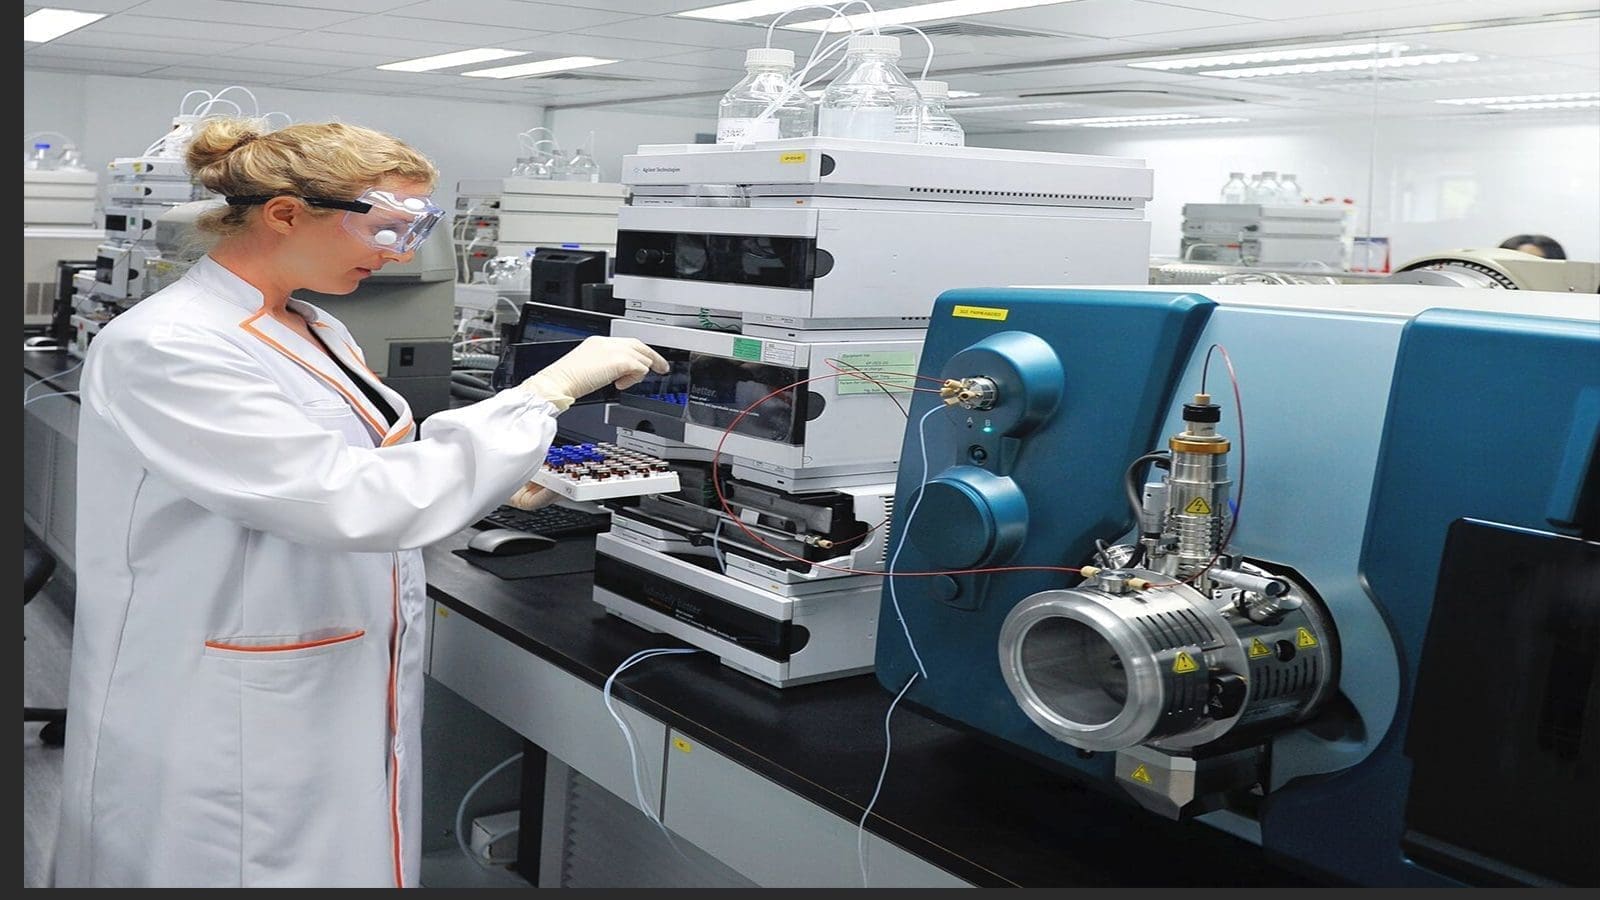 SGS Brazil laboratory receives ISO 17025 accreditation